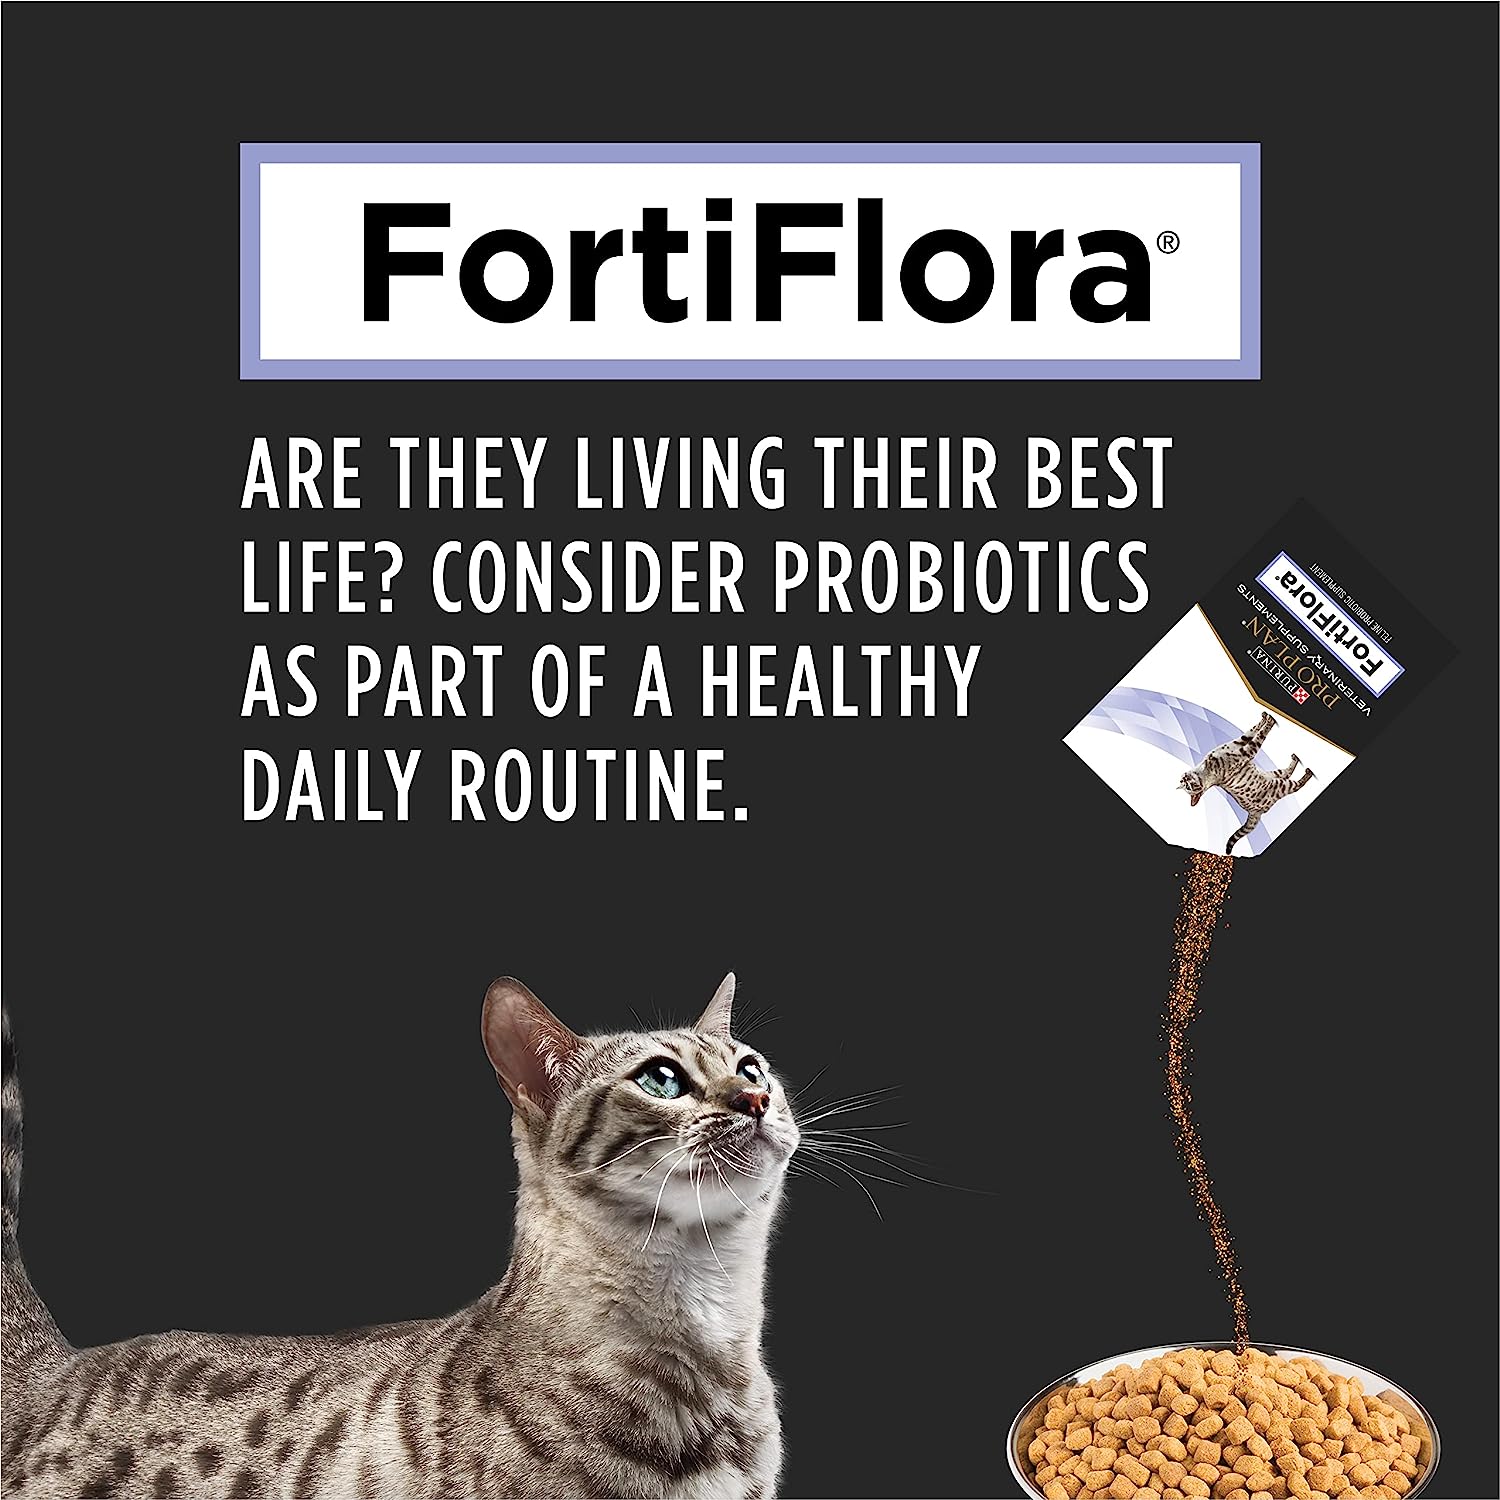 Purina Pro Plan Veterinary FortiFlora Probiotic Cat Supplement  Cat Supplies  | PetMax Canada